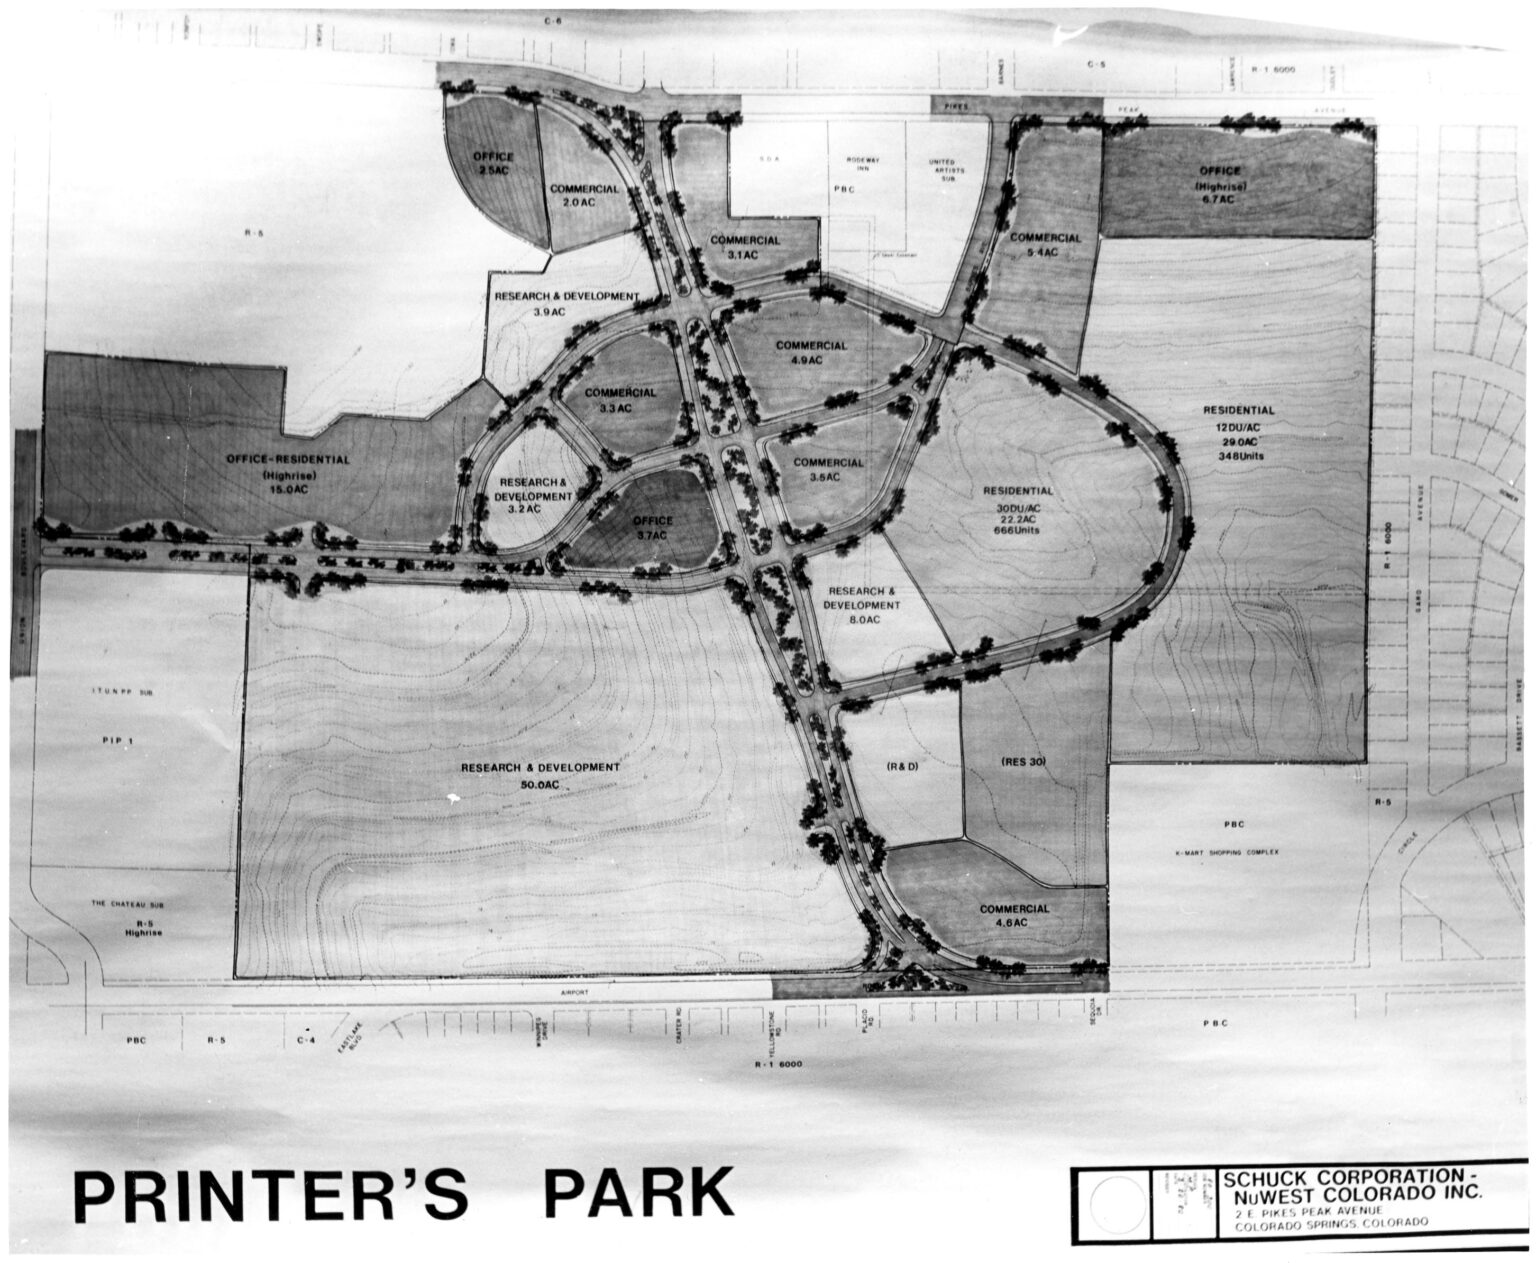 Union Printers Home Park Development